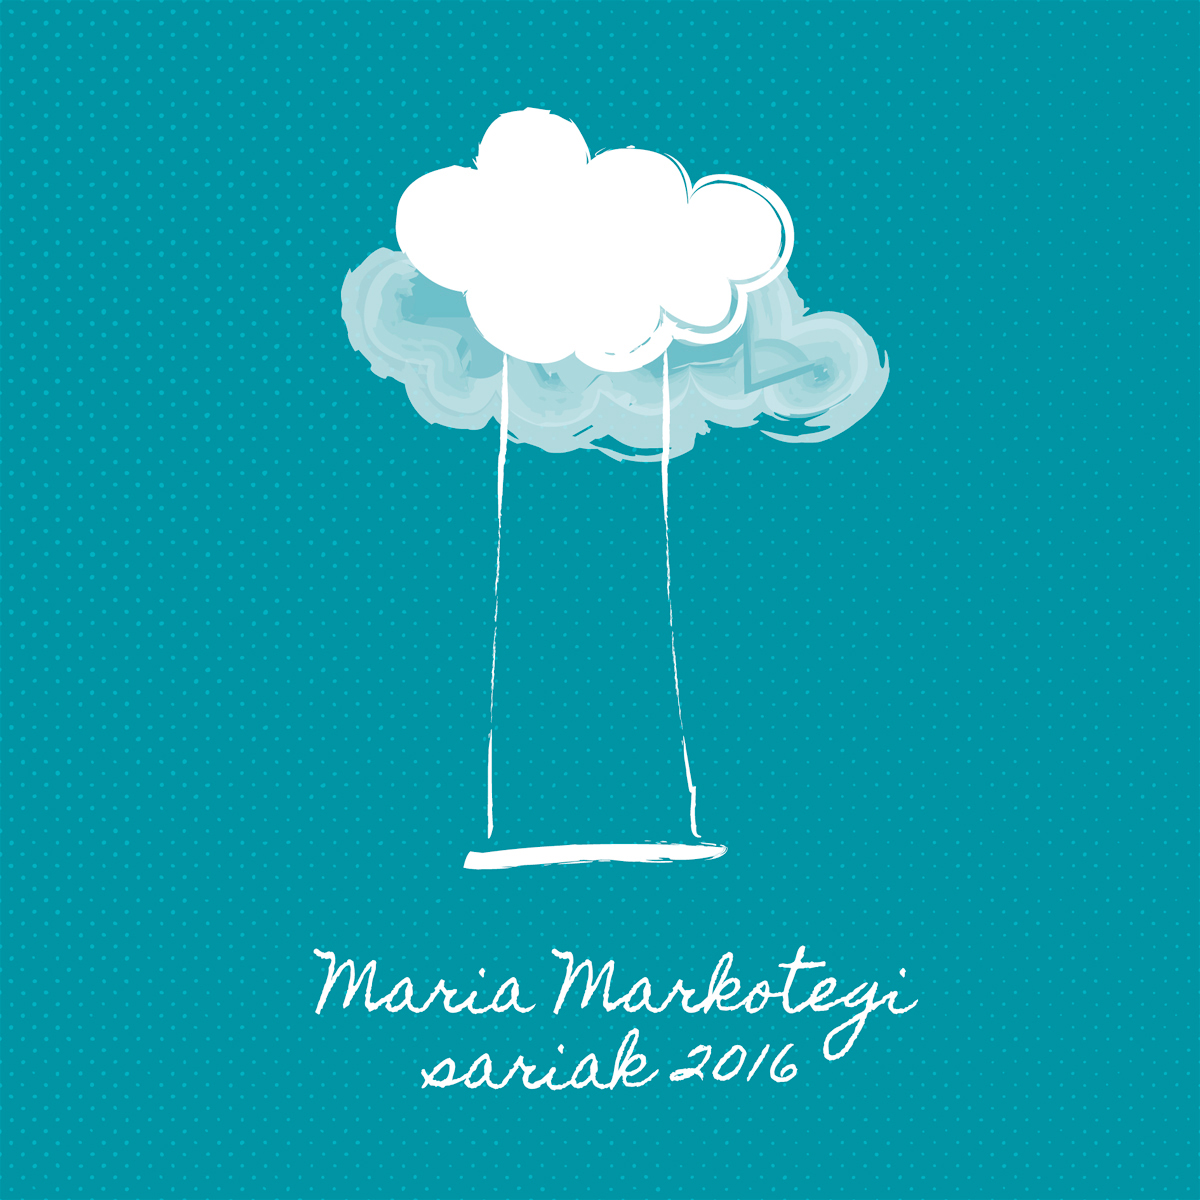 Premios Maria Markotegi 2016